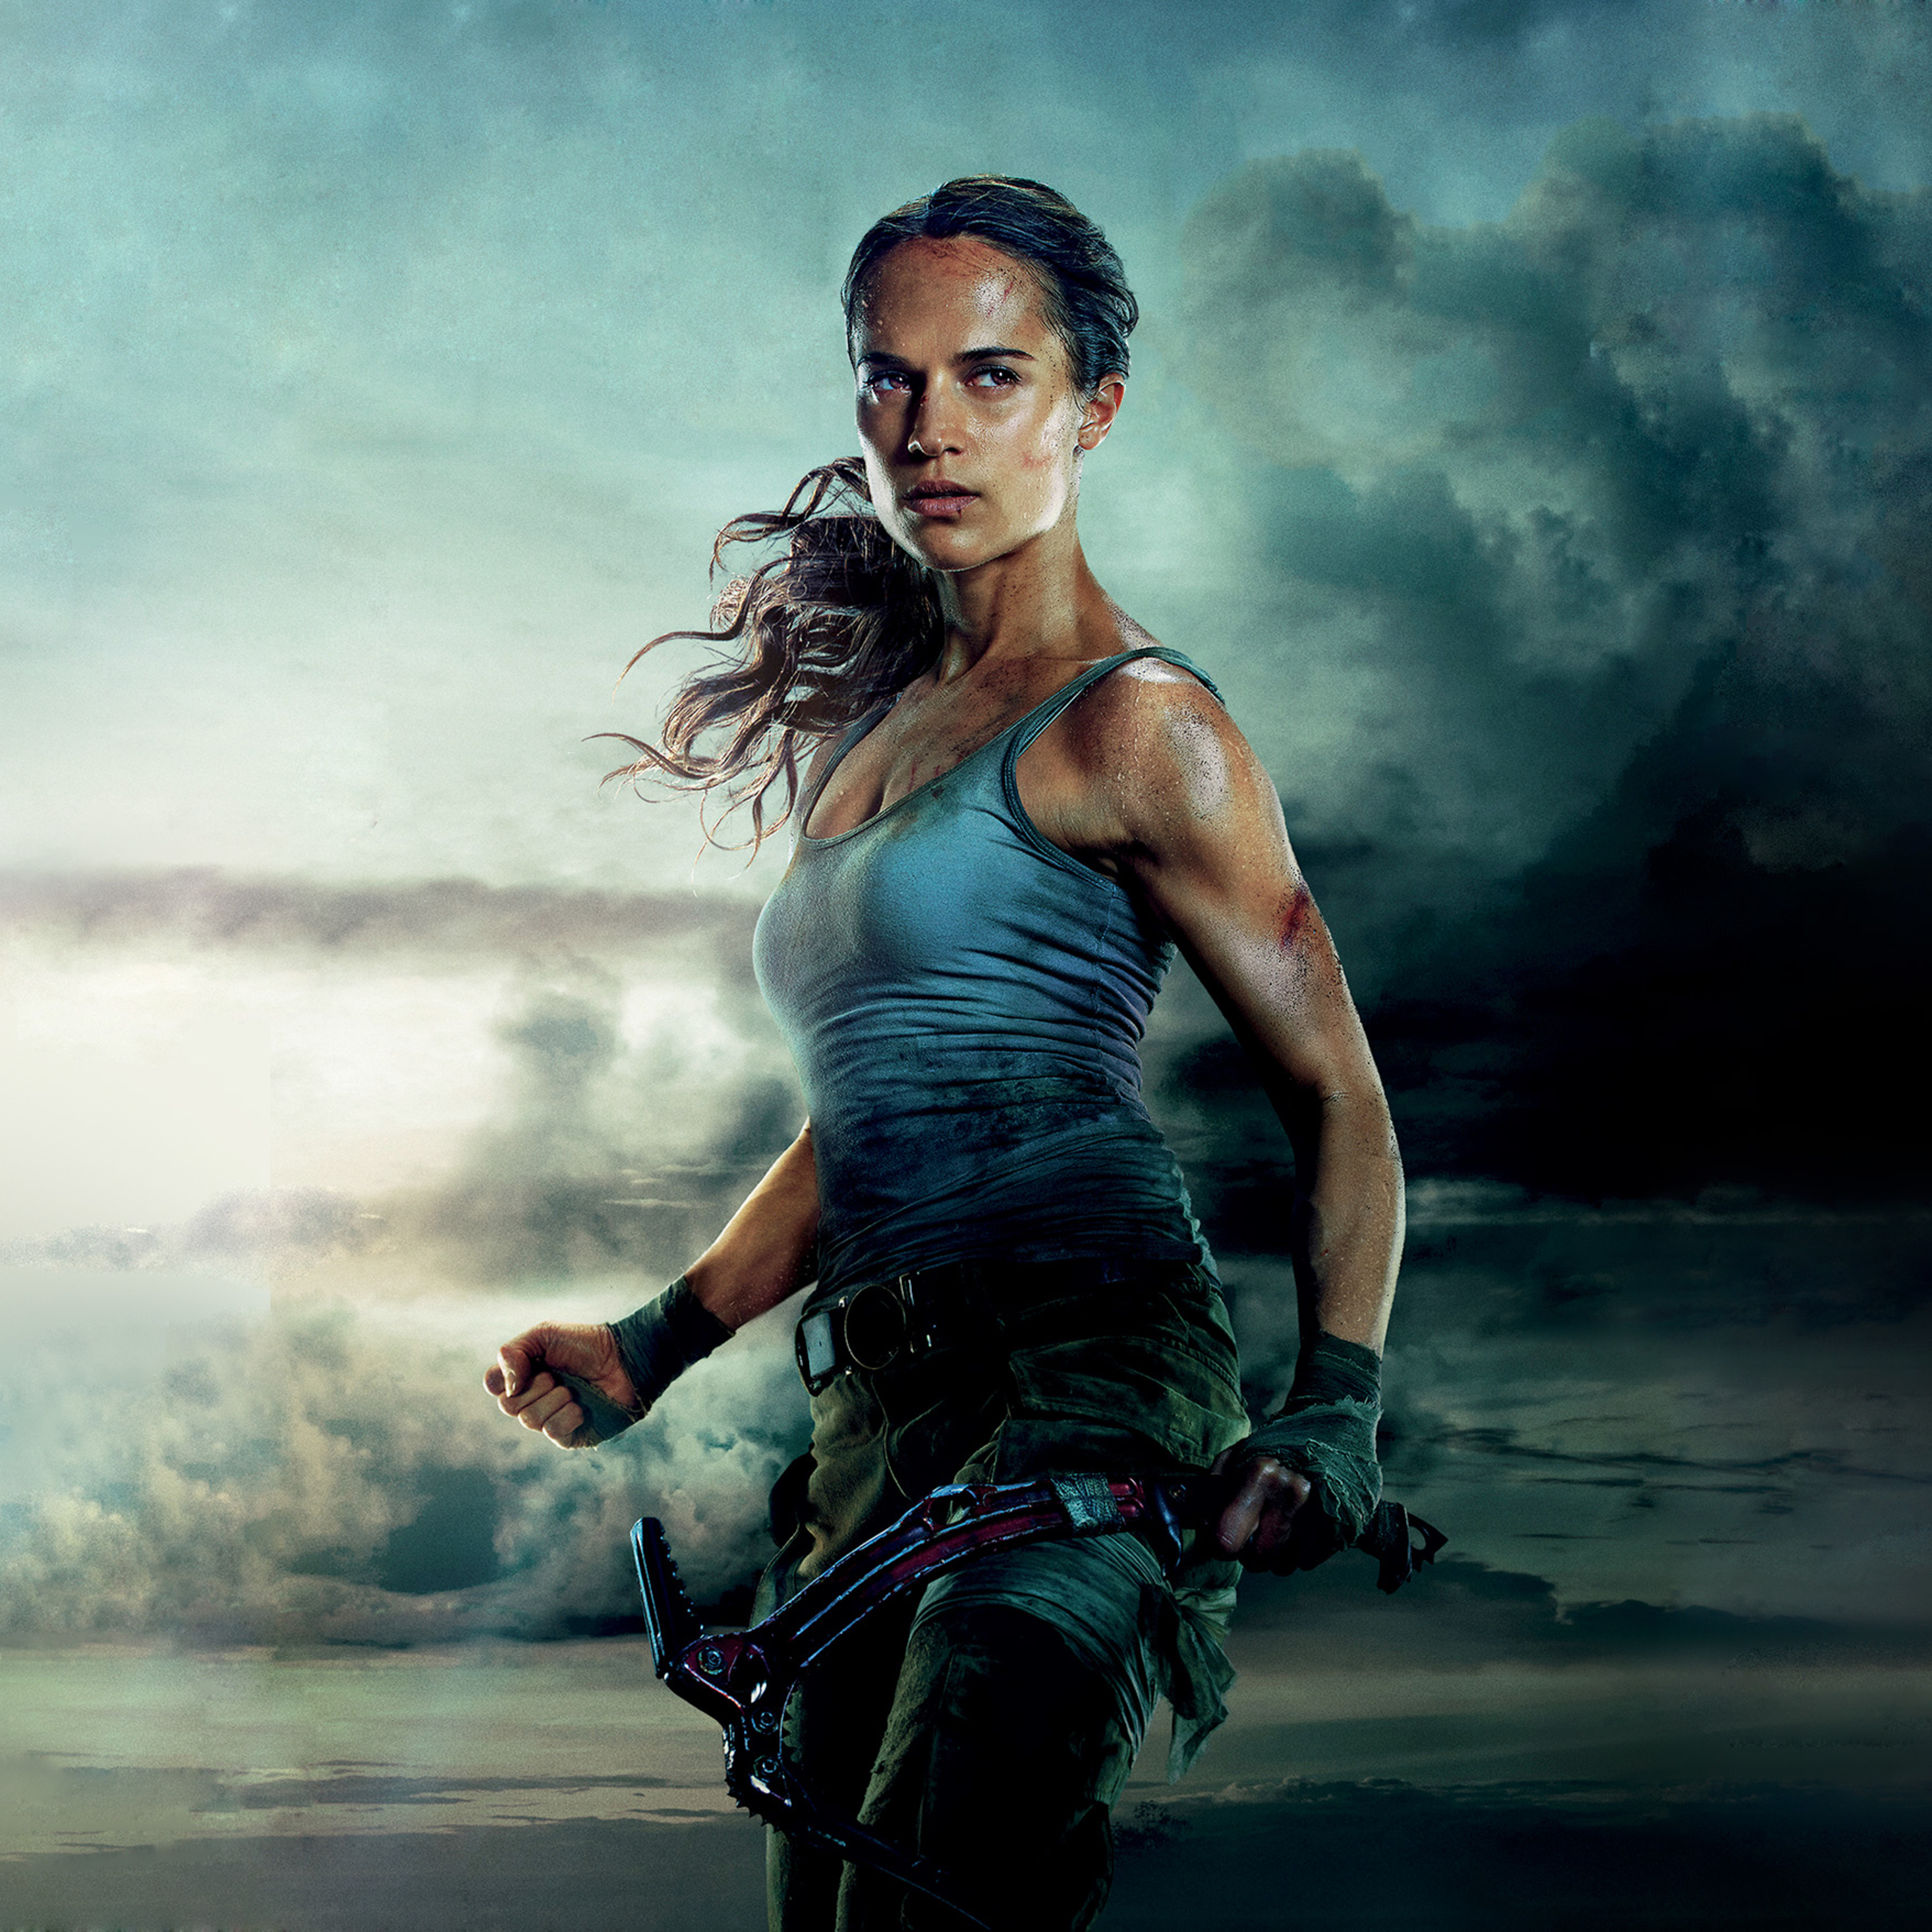 Tomb Raider Movie 4k In 2932x2932 Resolution. tomb-raider-movie-4k-fq.jpg. 